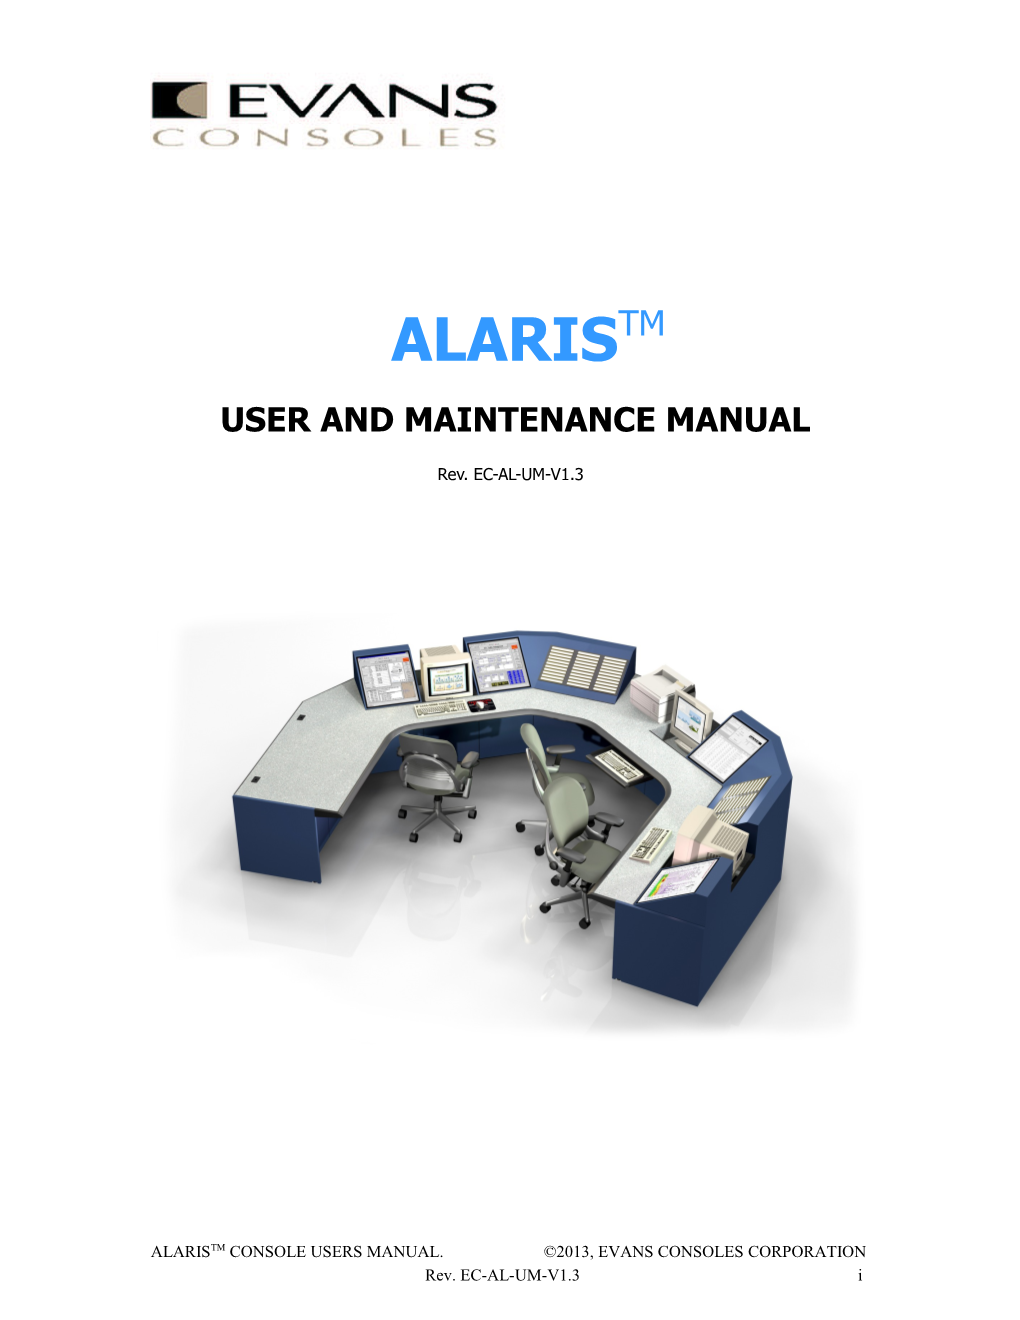 User and Maintenance Manual